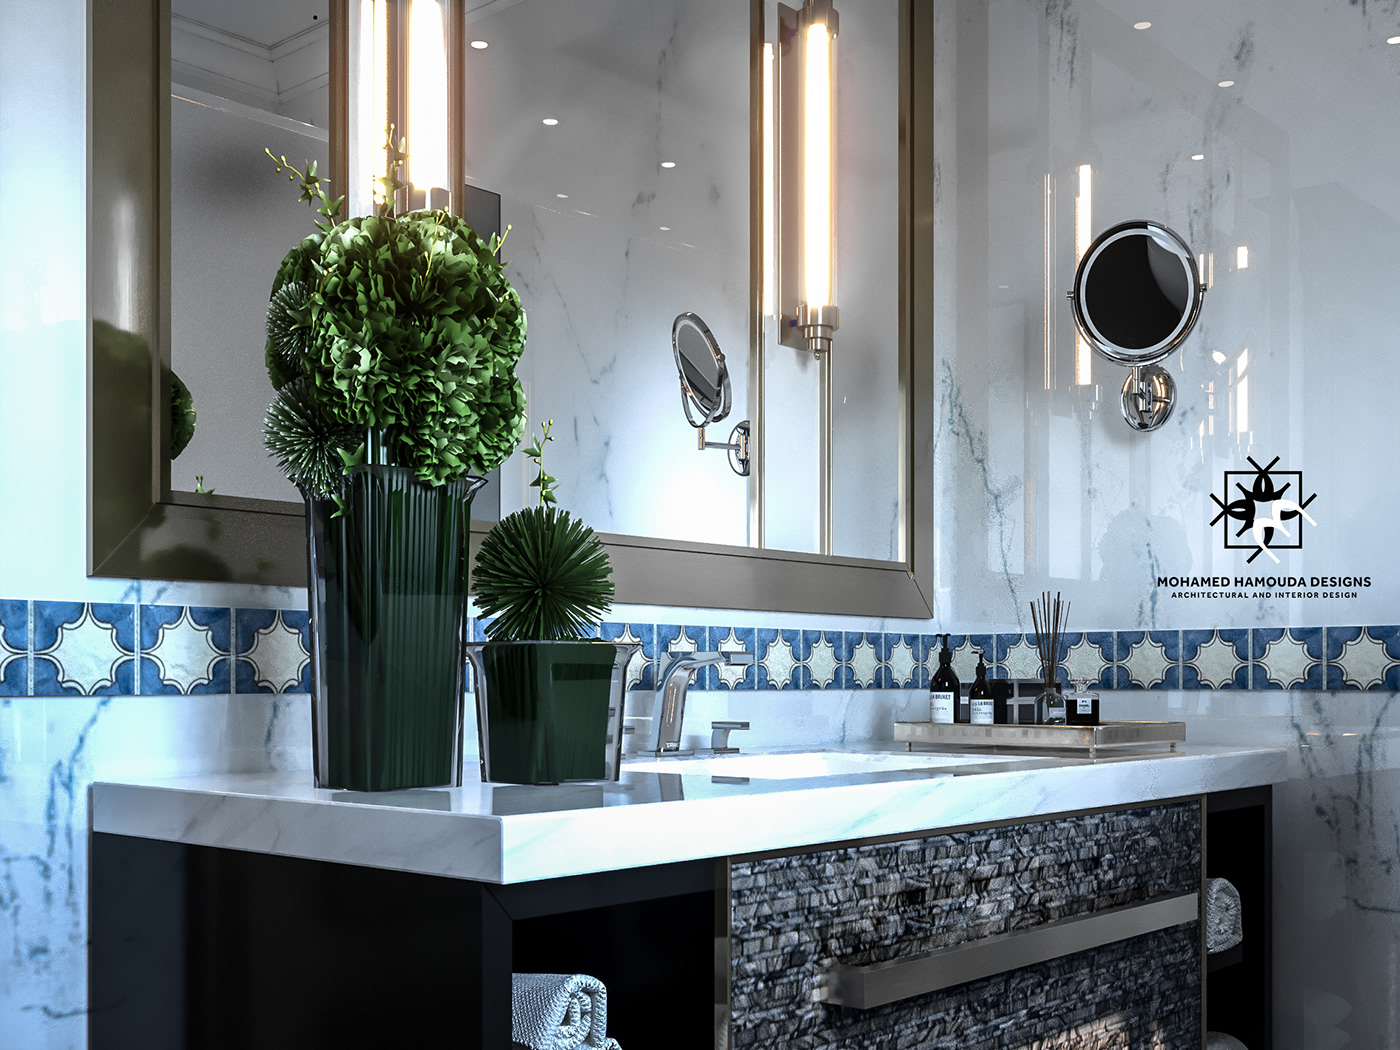 neoclassic Villa luxury Chandeliers gold Interior design residential decor corona